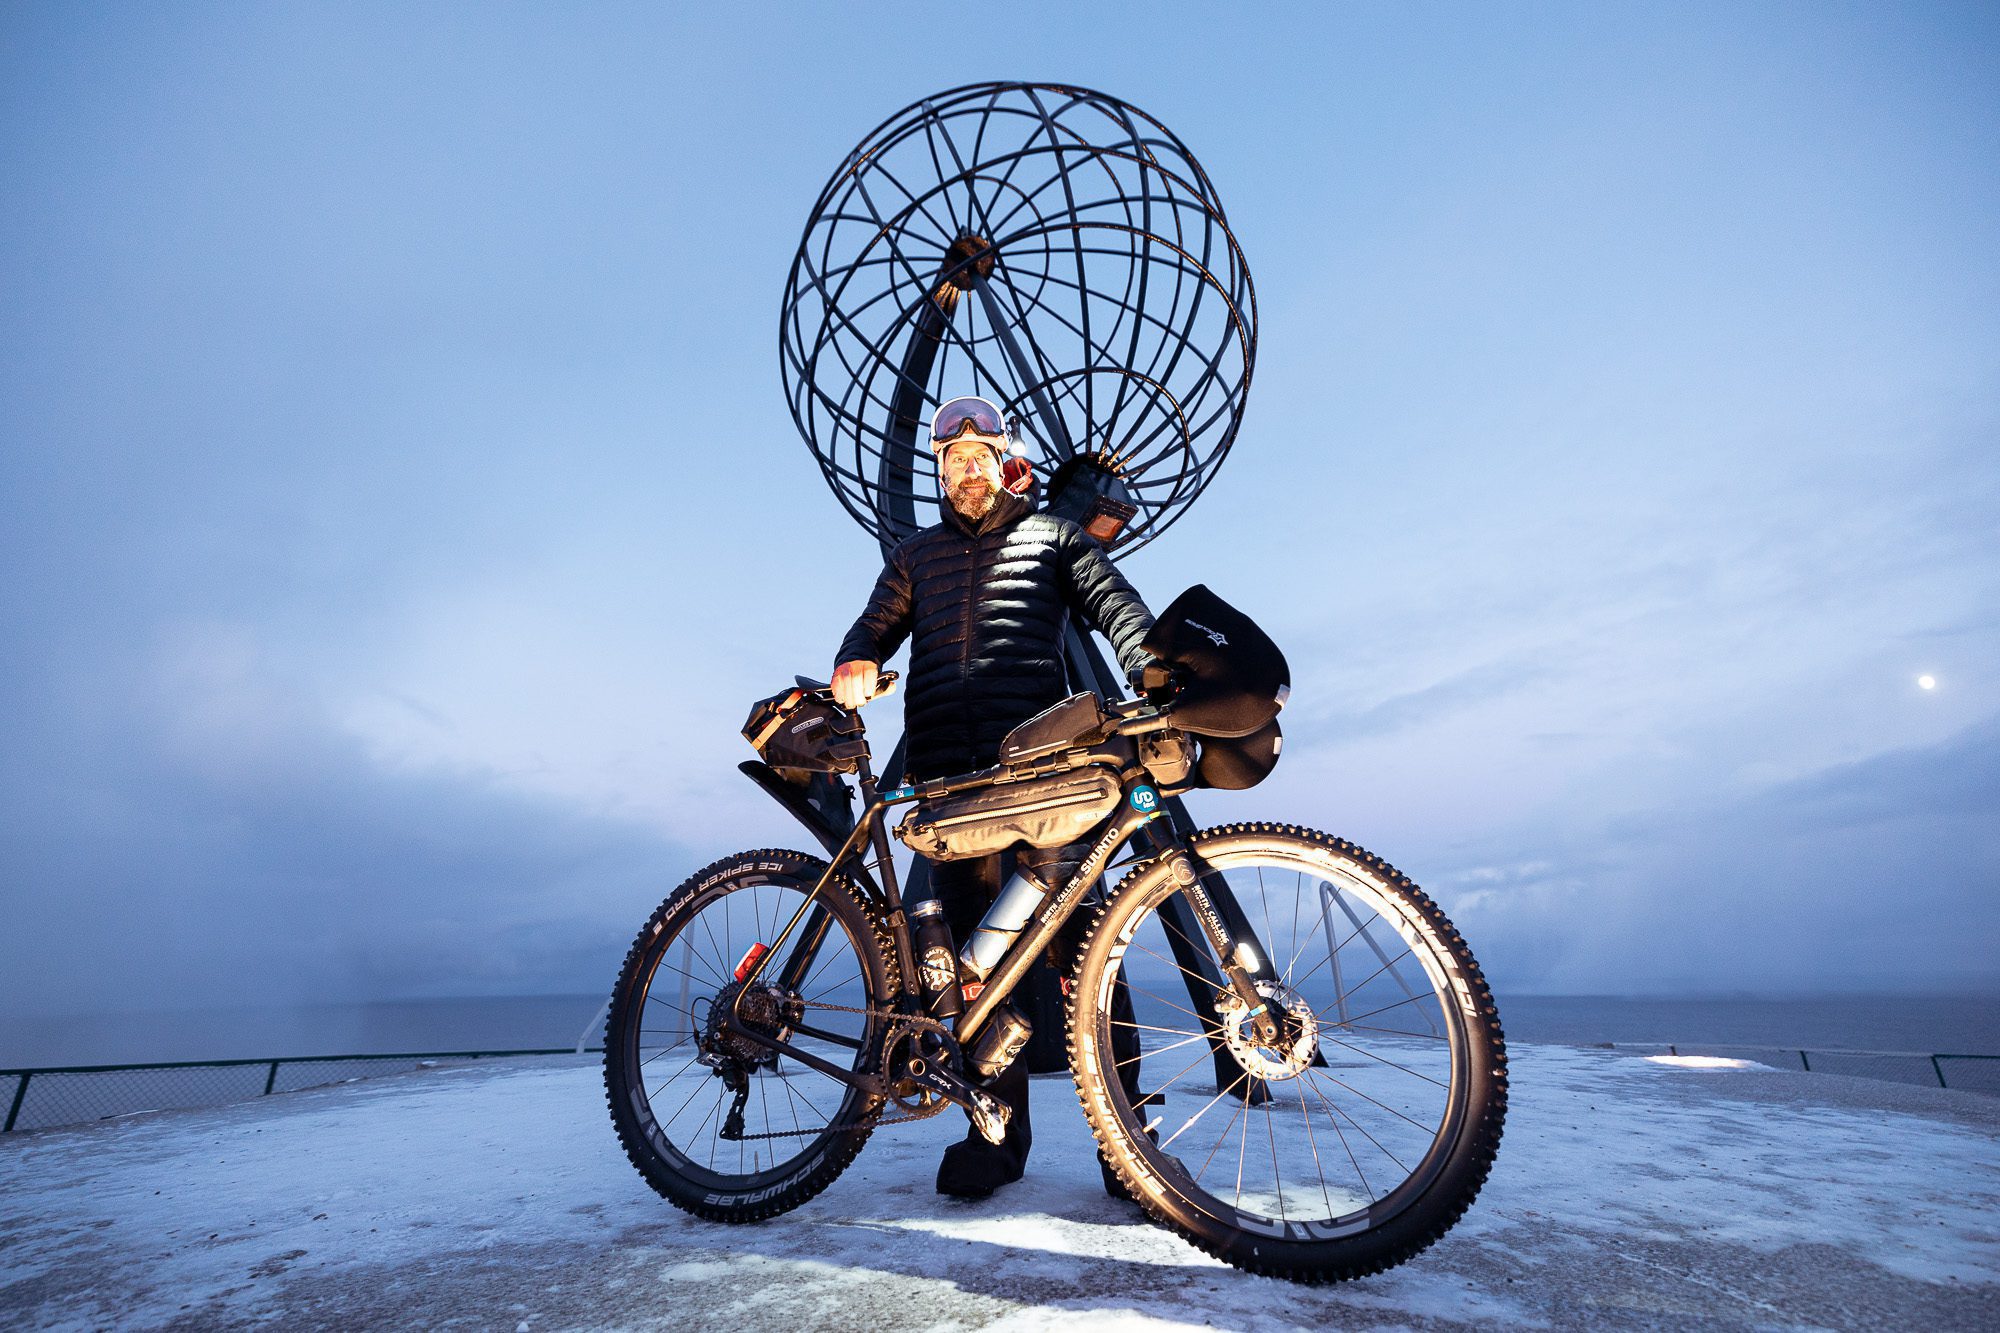 Arnaud Manzanini, le cycliste qui roule à l'extrême